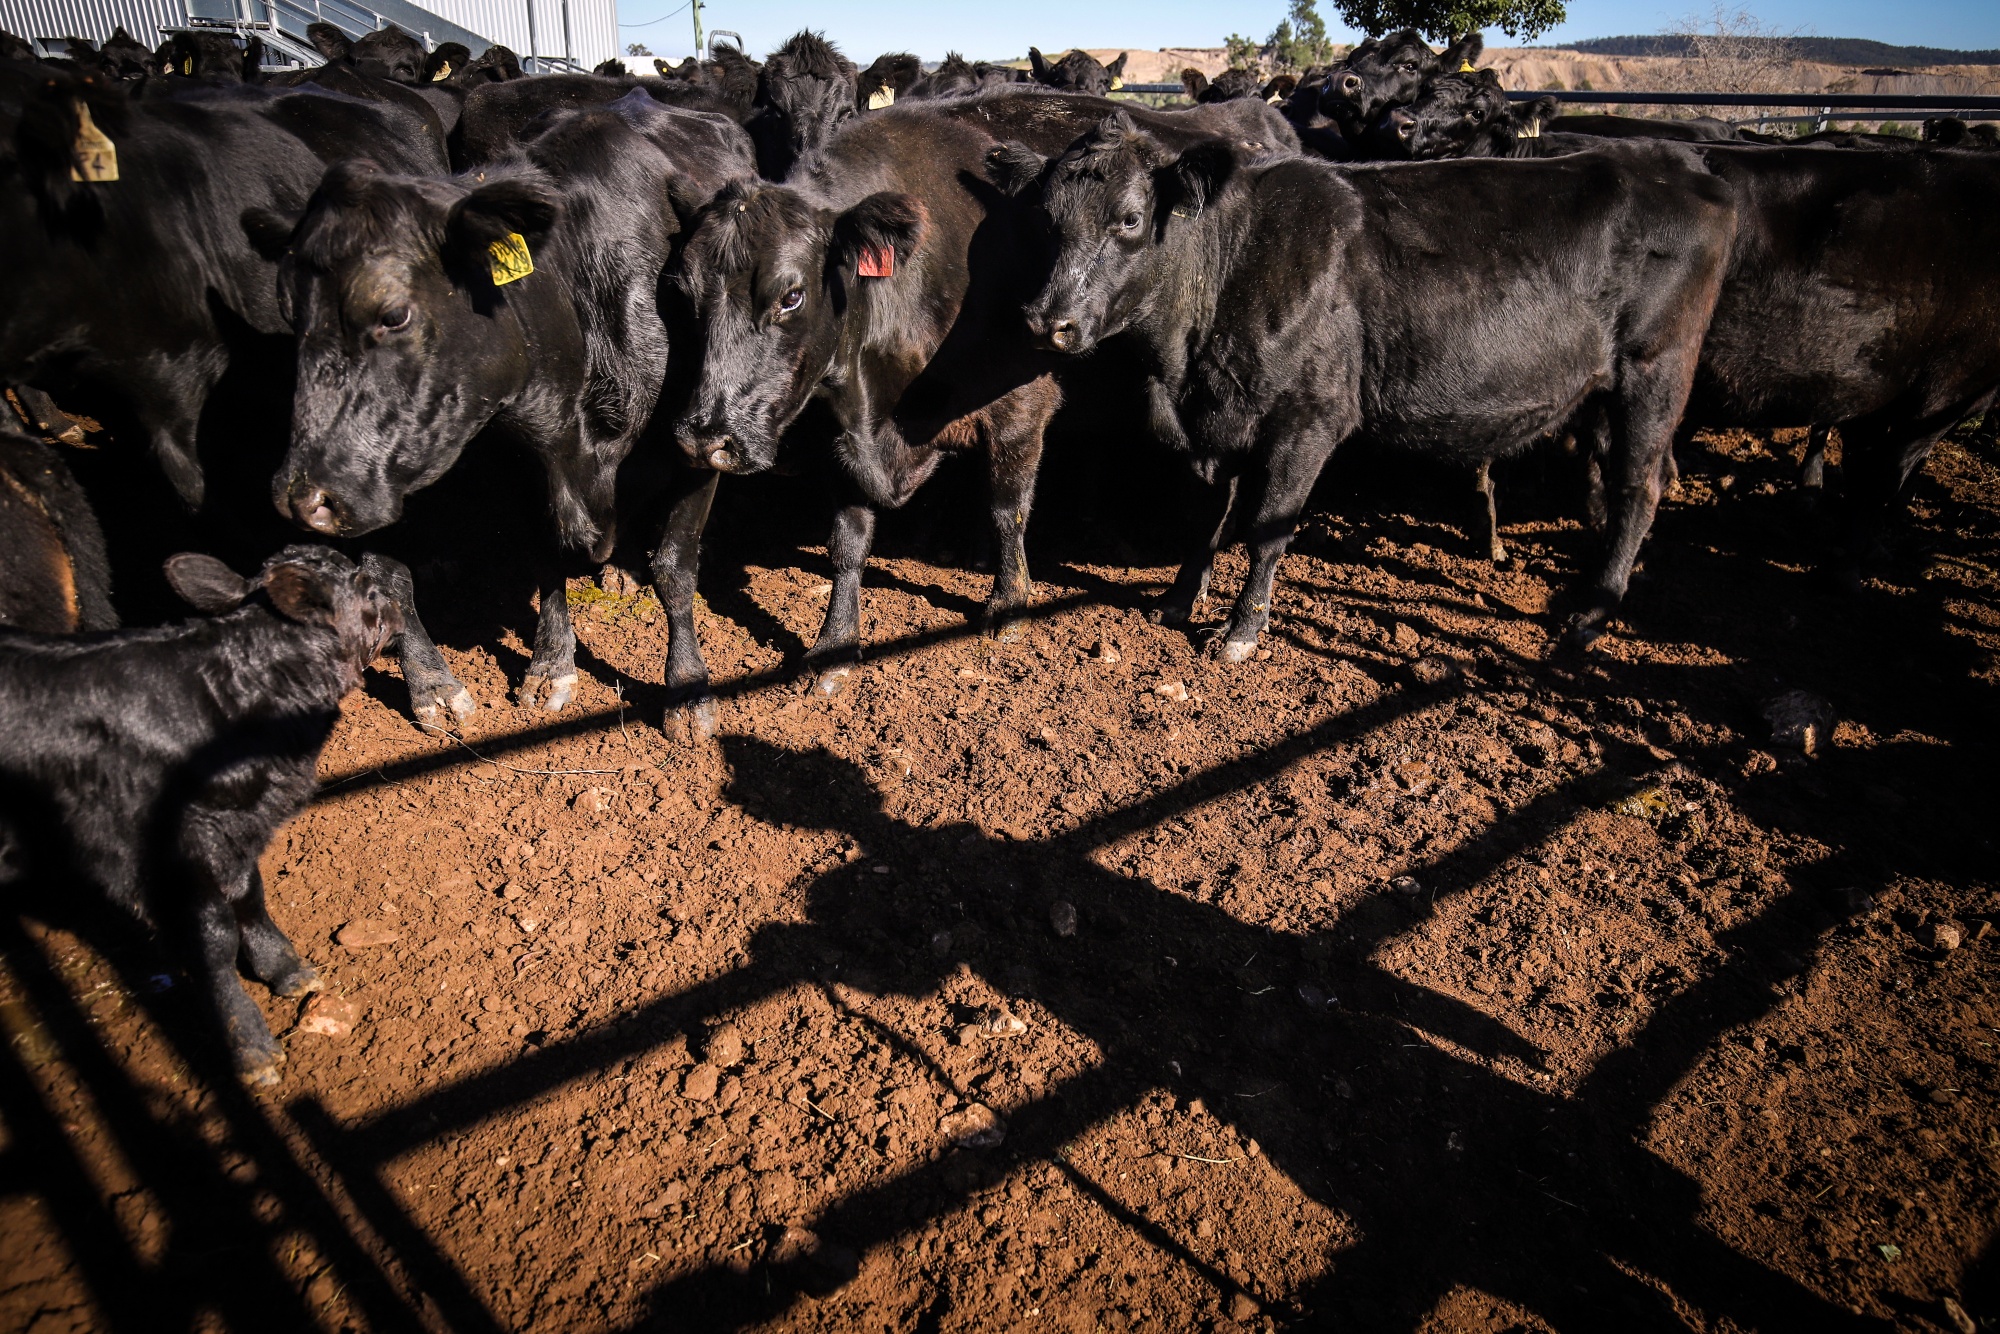 Cattle at a farm in Gunnedah, New South Wales, Australia.